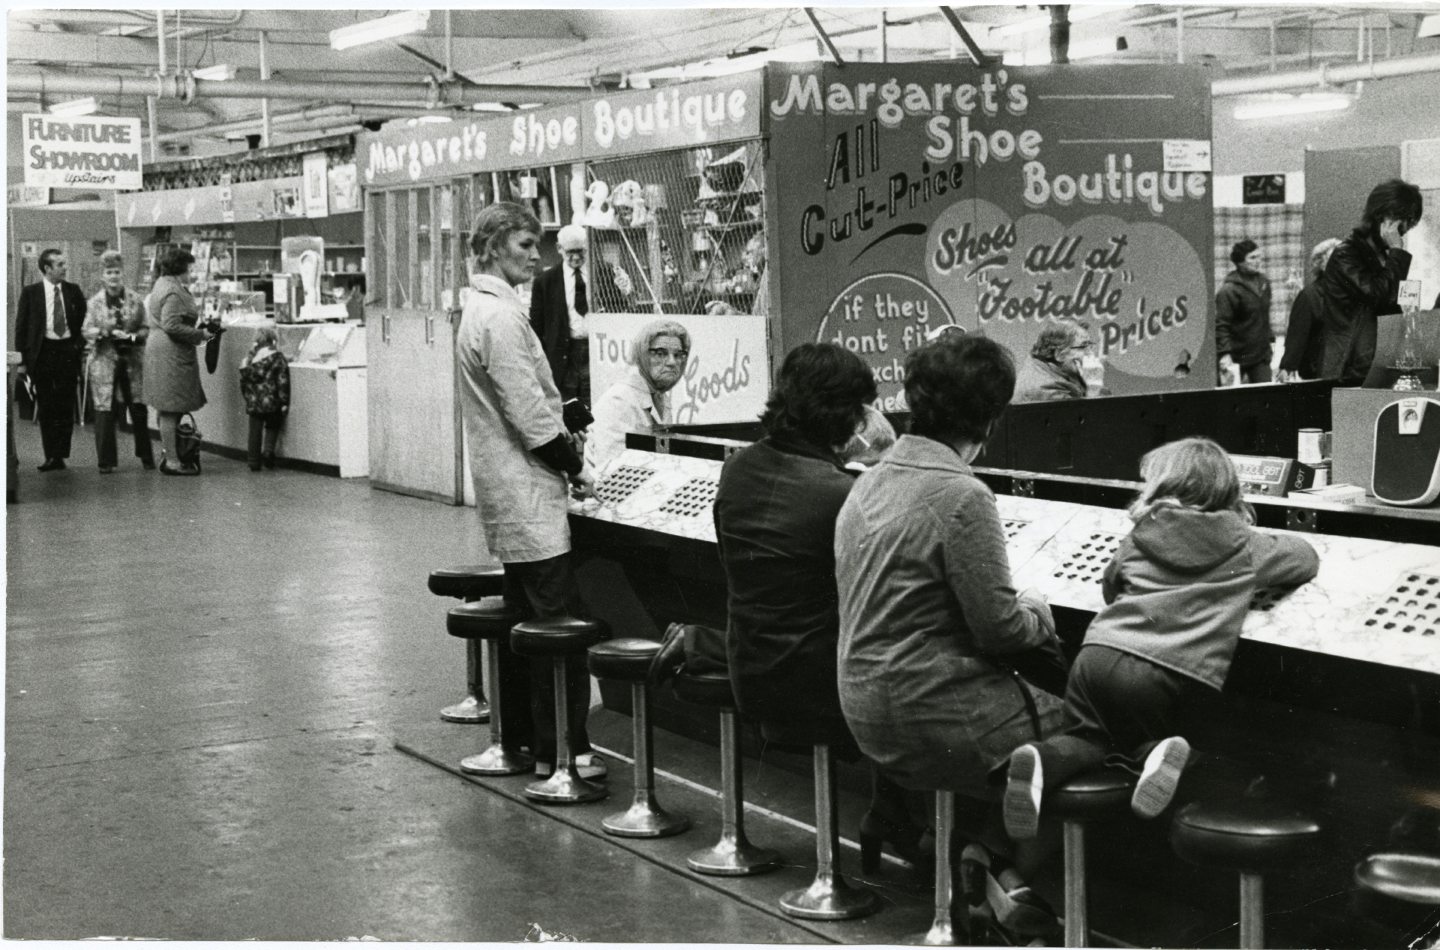 Margaret's Shoe Boutique in 1975.